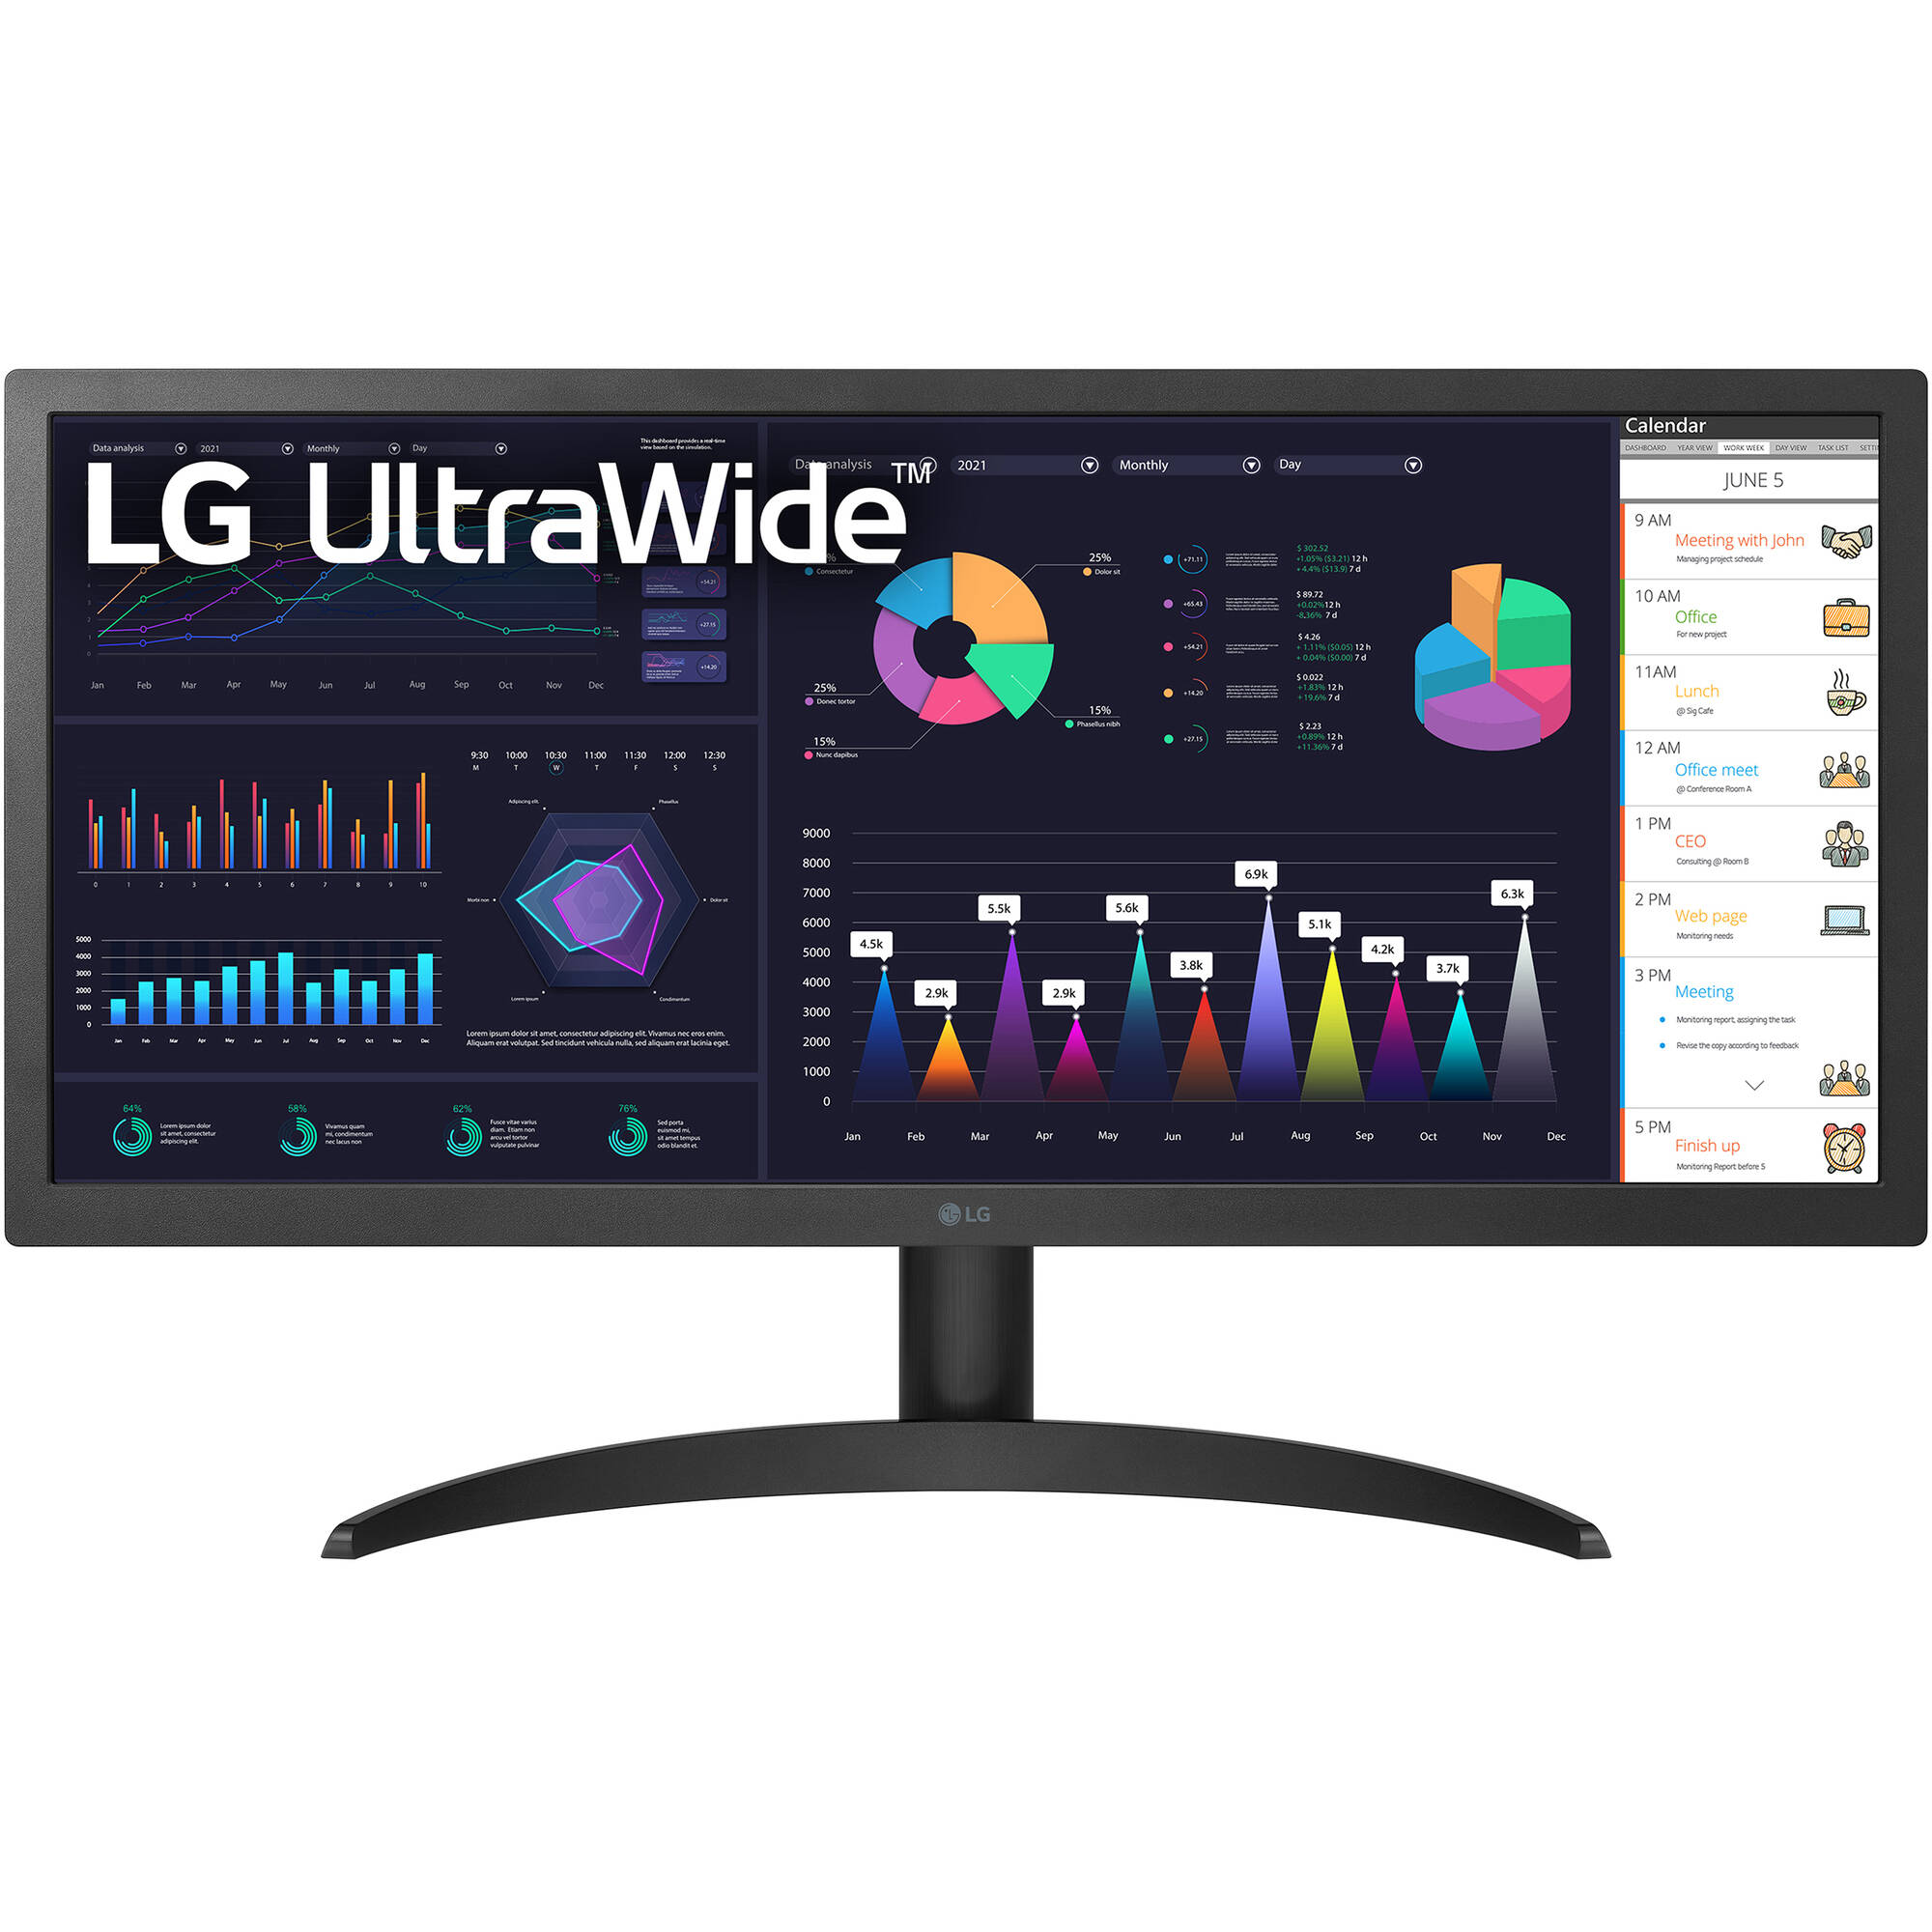 LG Ultrawide 25.7 "1080p Monitor HDR